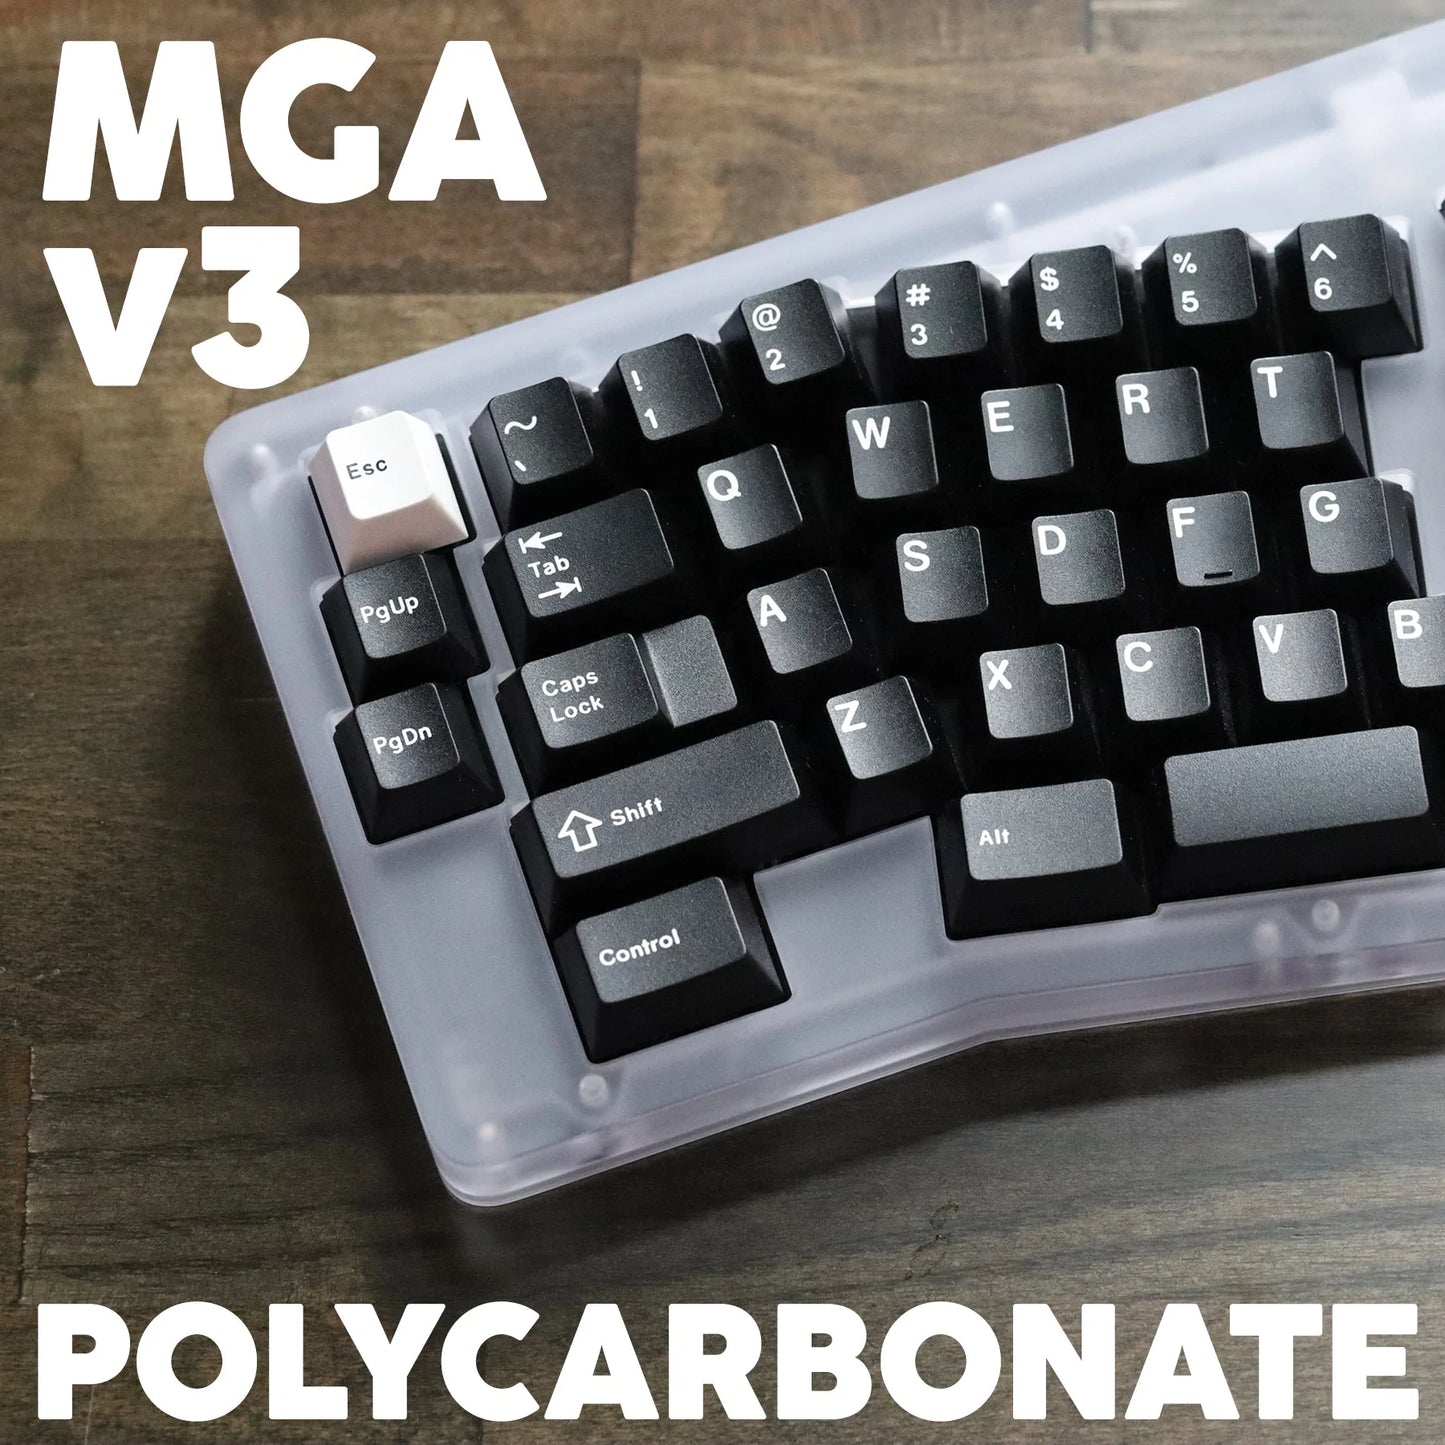 MGA v3 Polycarbonate Special Edition